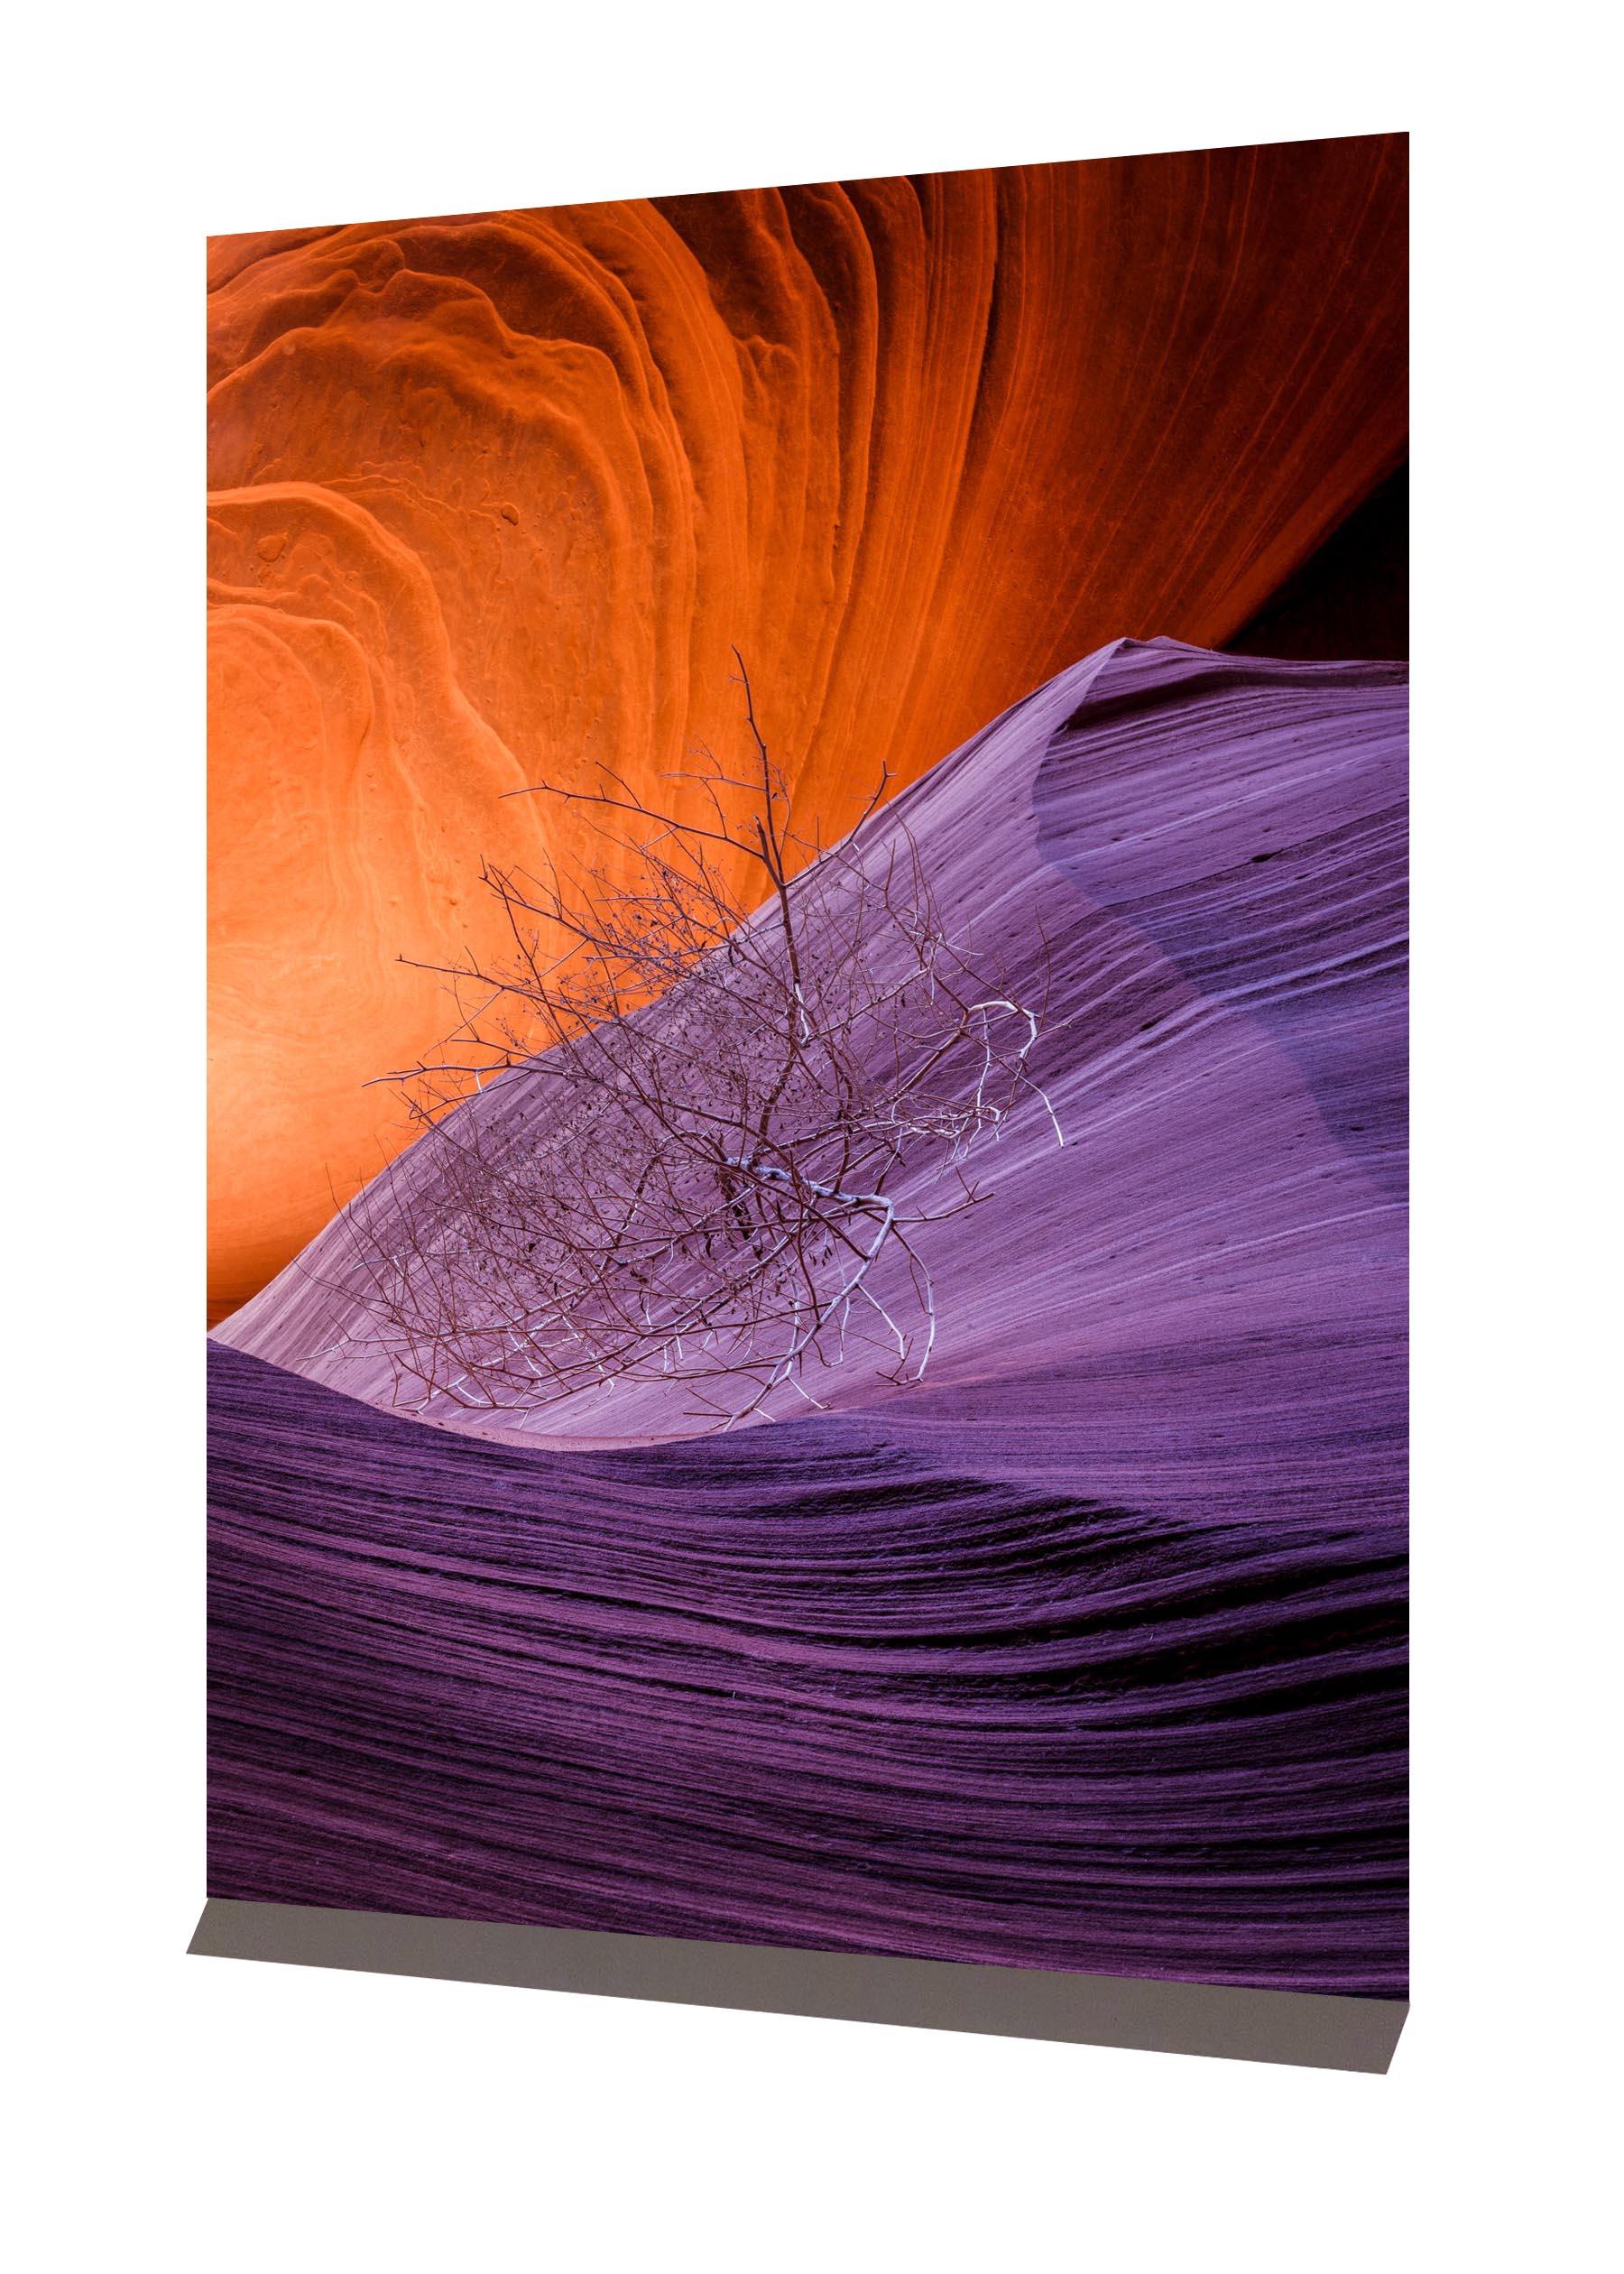 Arizona landscape photography with orange and purple , 